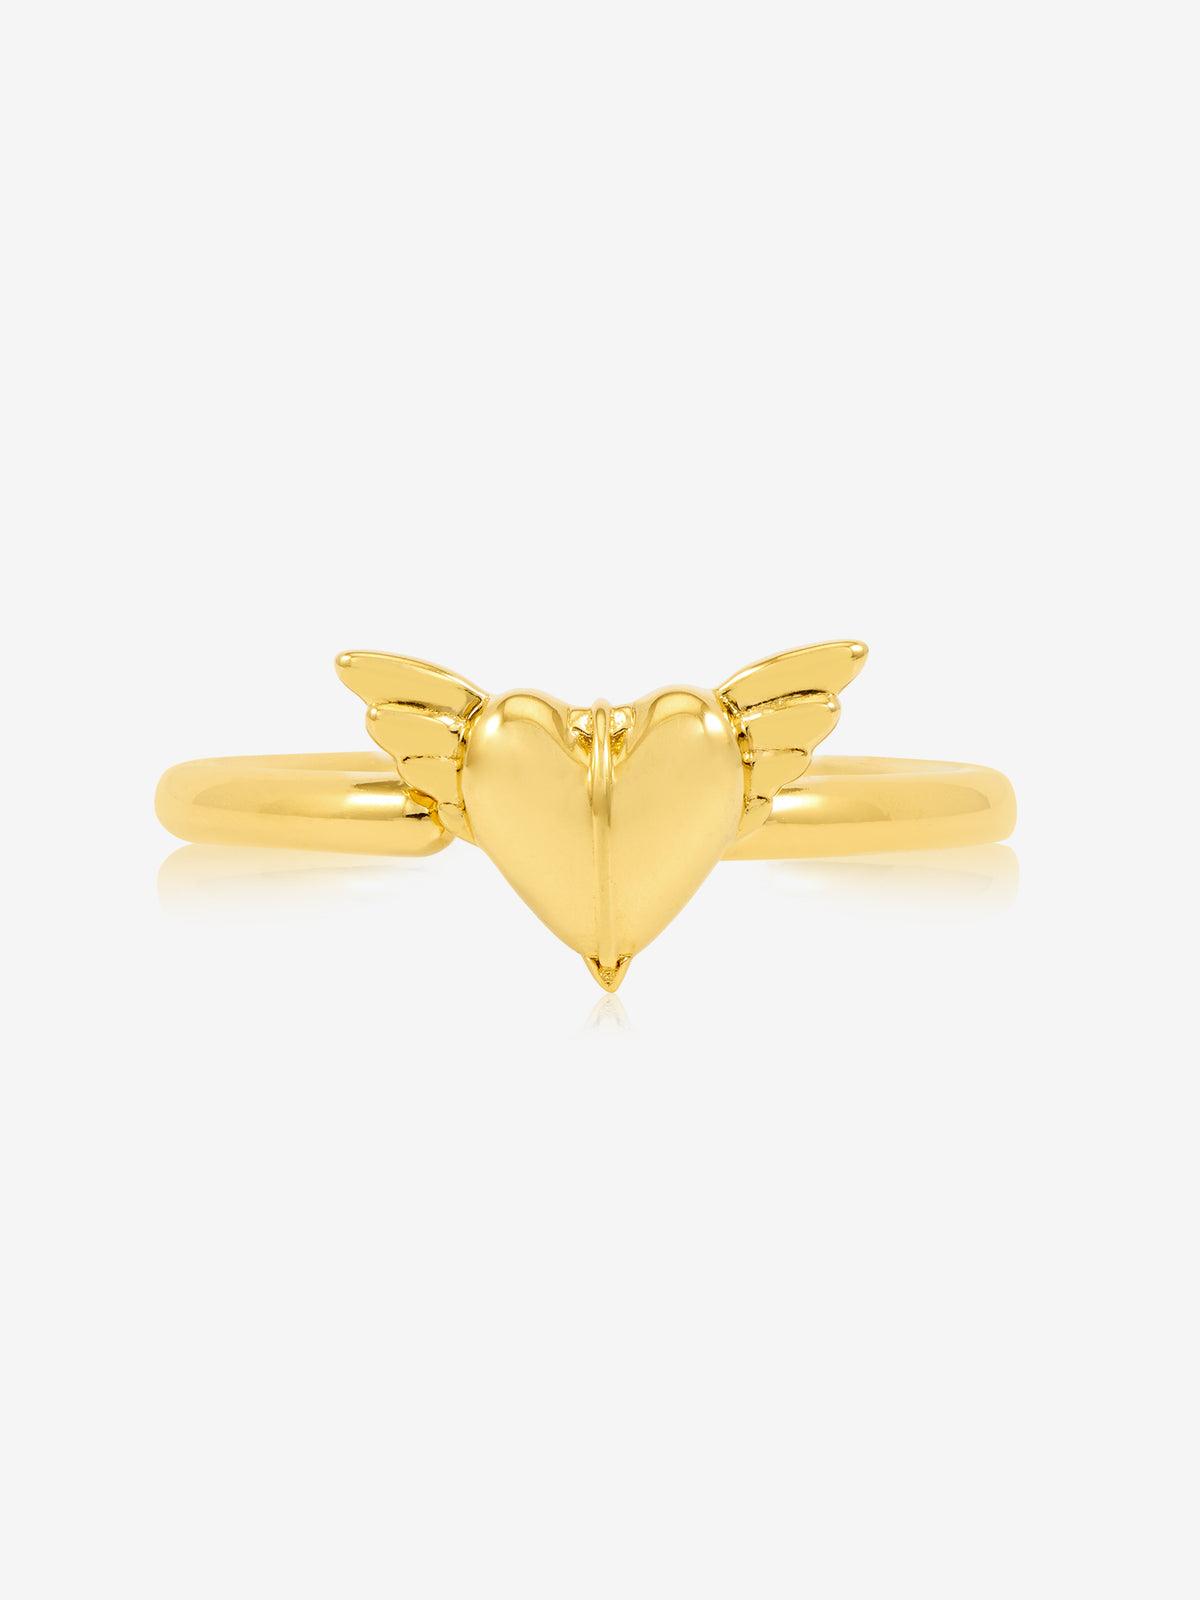 Adjustable Guardian Angel Wings Heart Ring